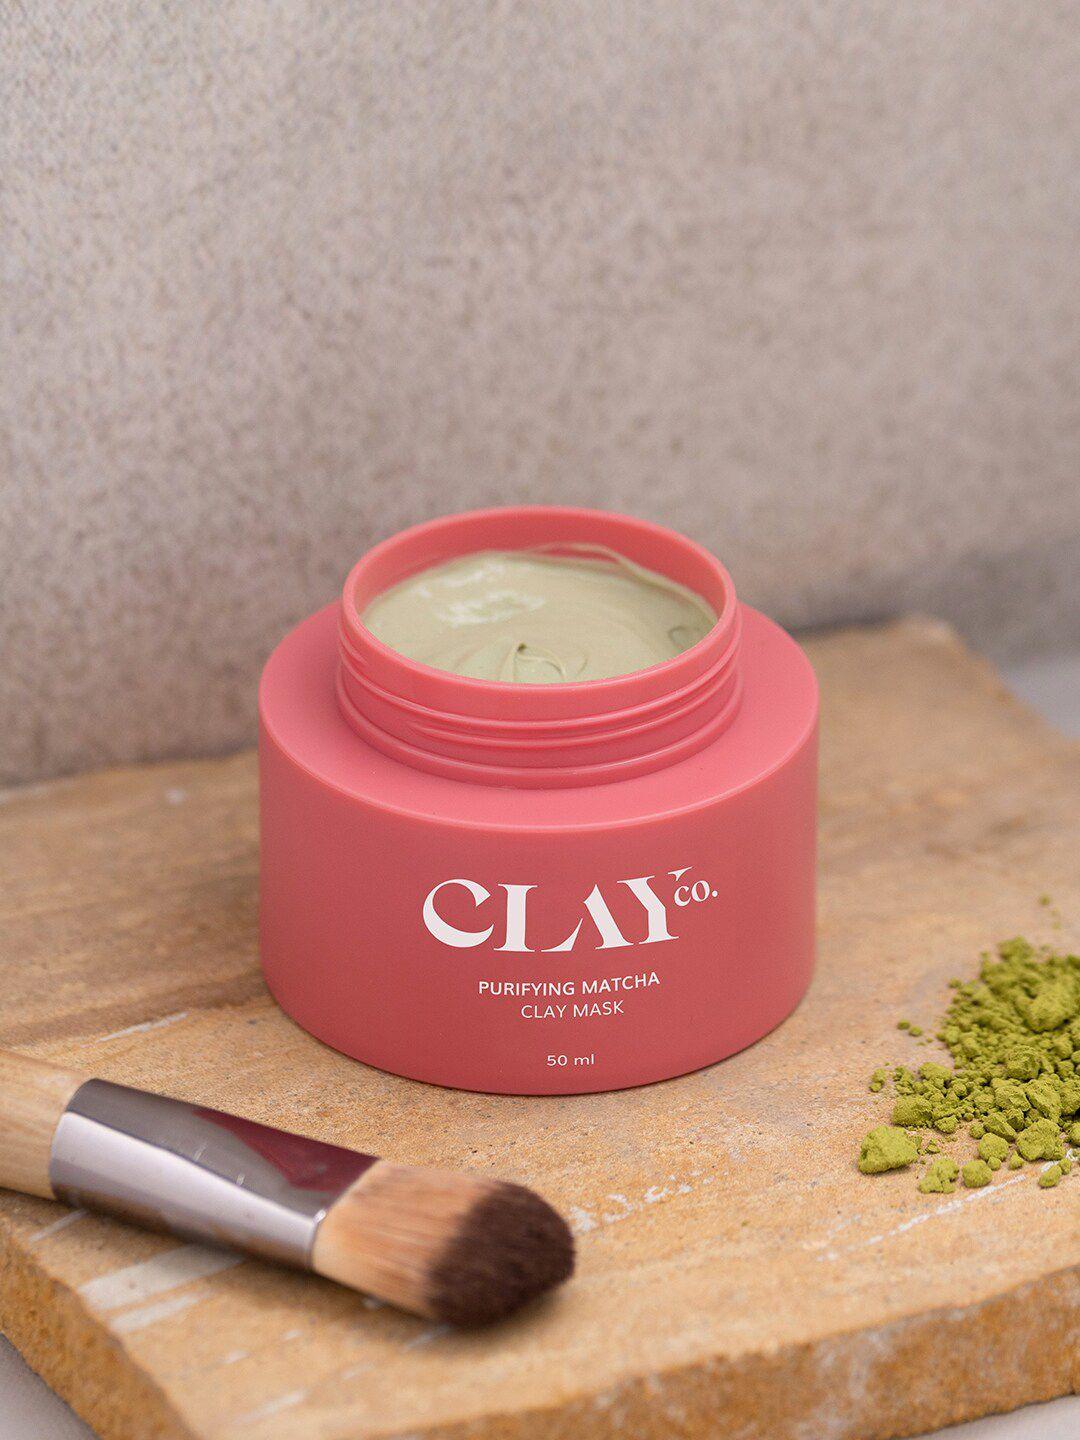 clayco. purifying matcha clay mask - 50ml